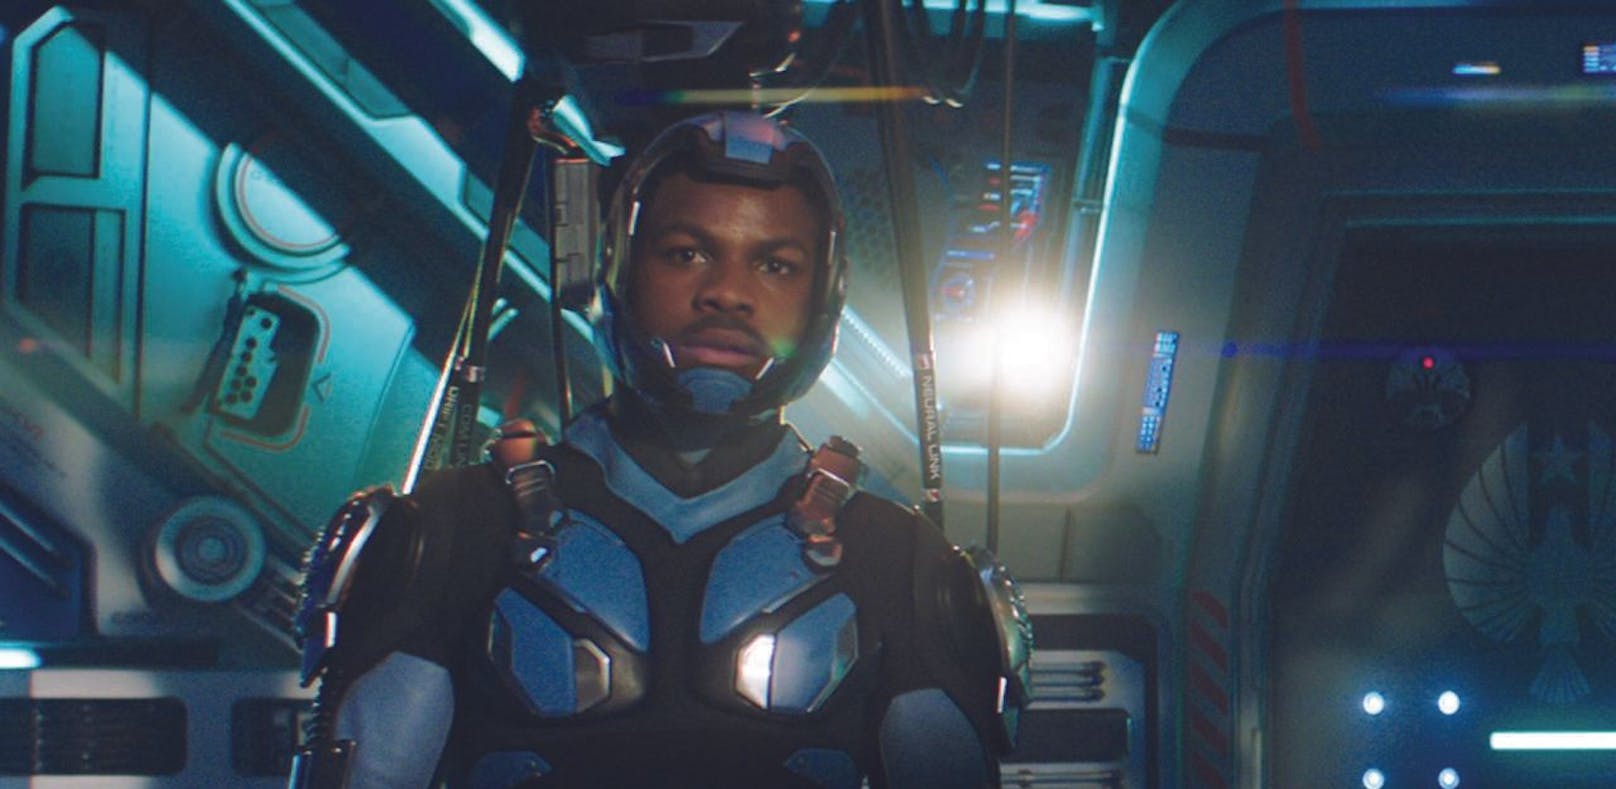 Pacific Rim 2 stößt Black Panther vom Kino-Thron